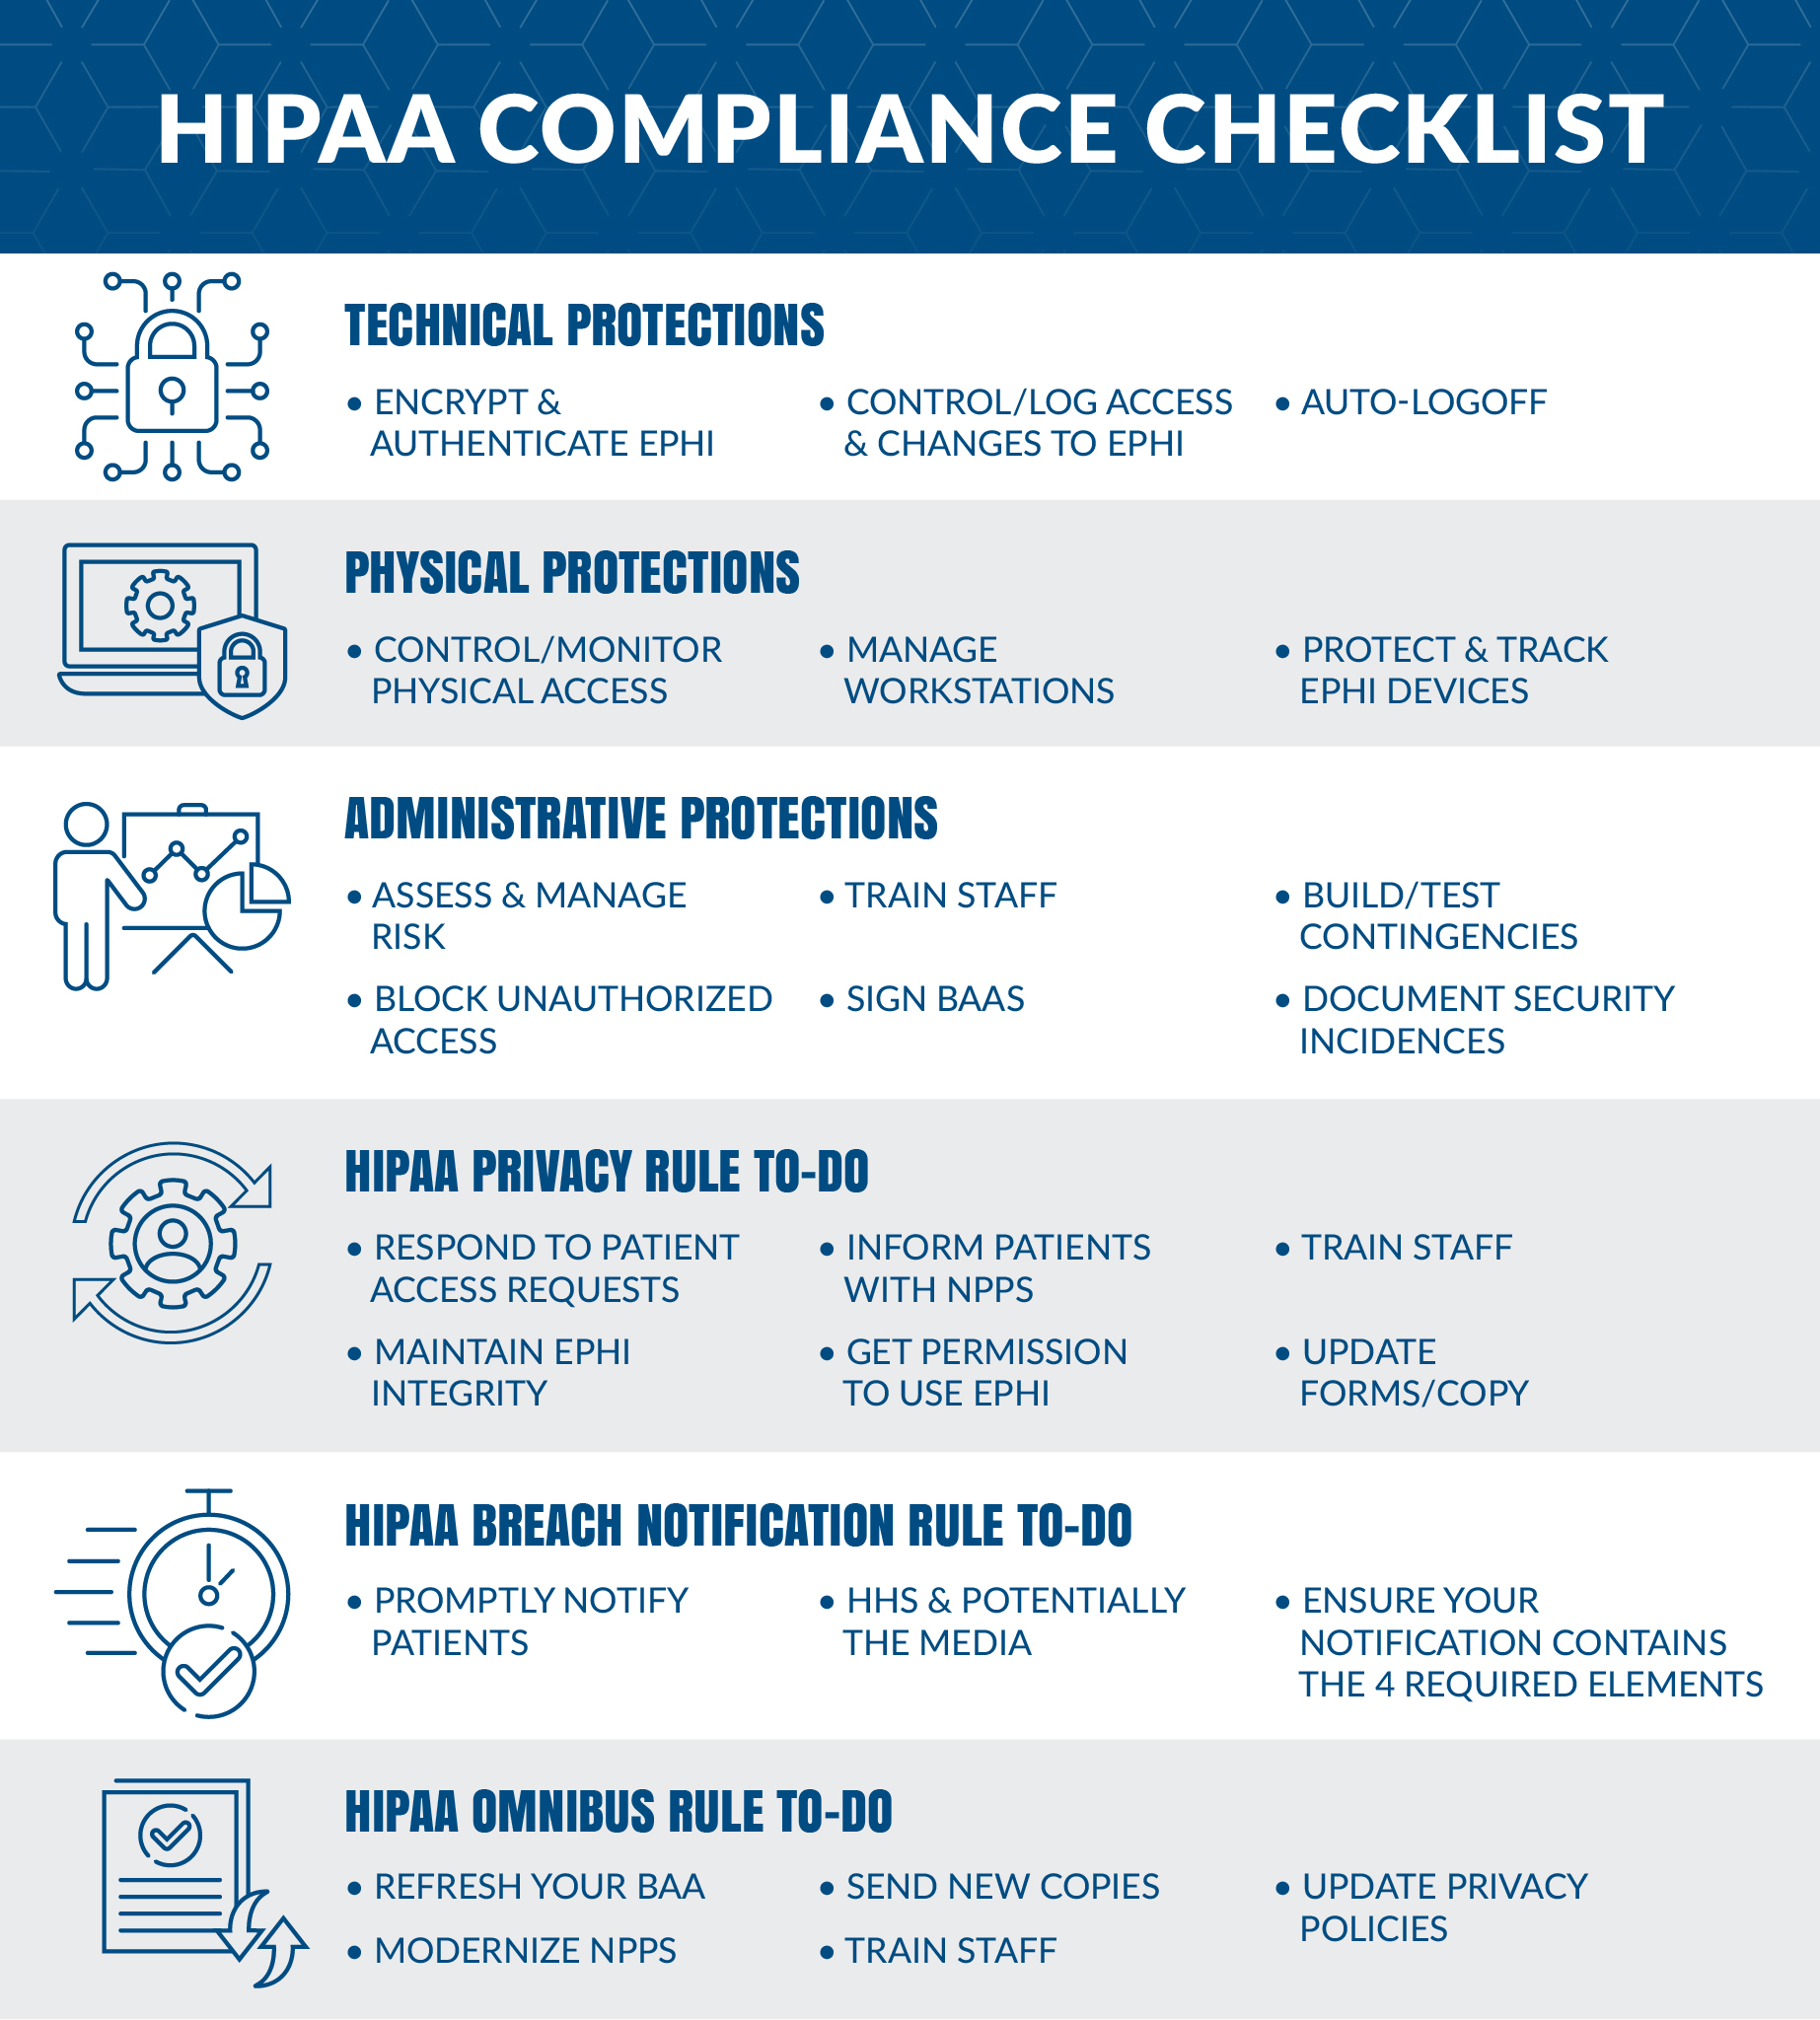 HIPAA Compliance Checklist 2022